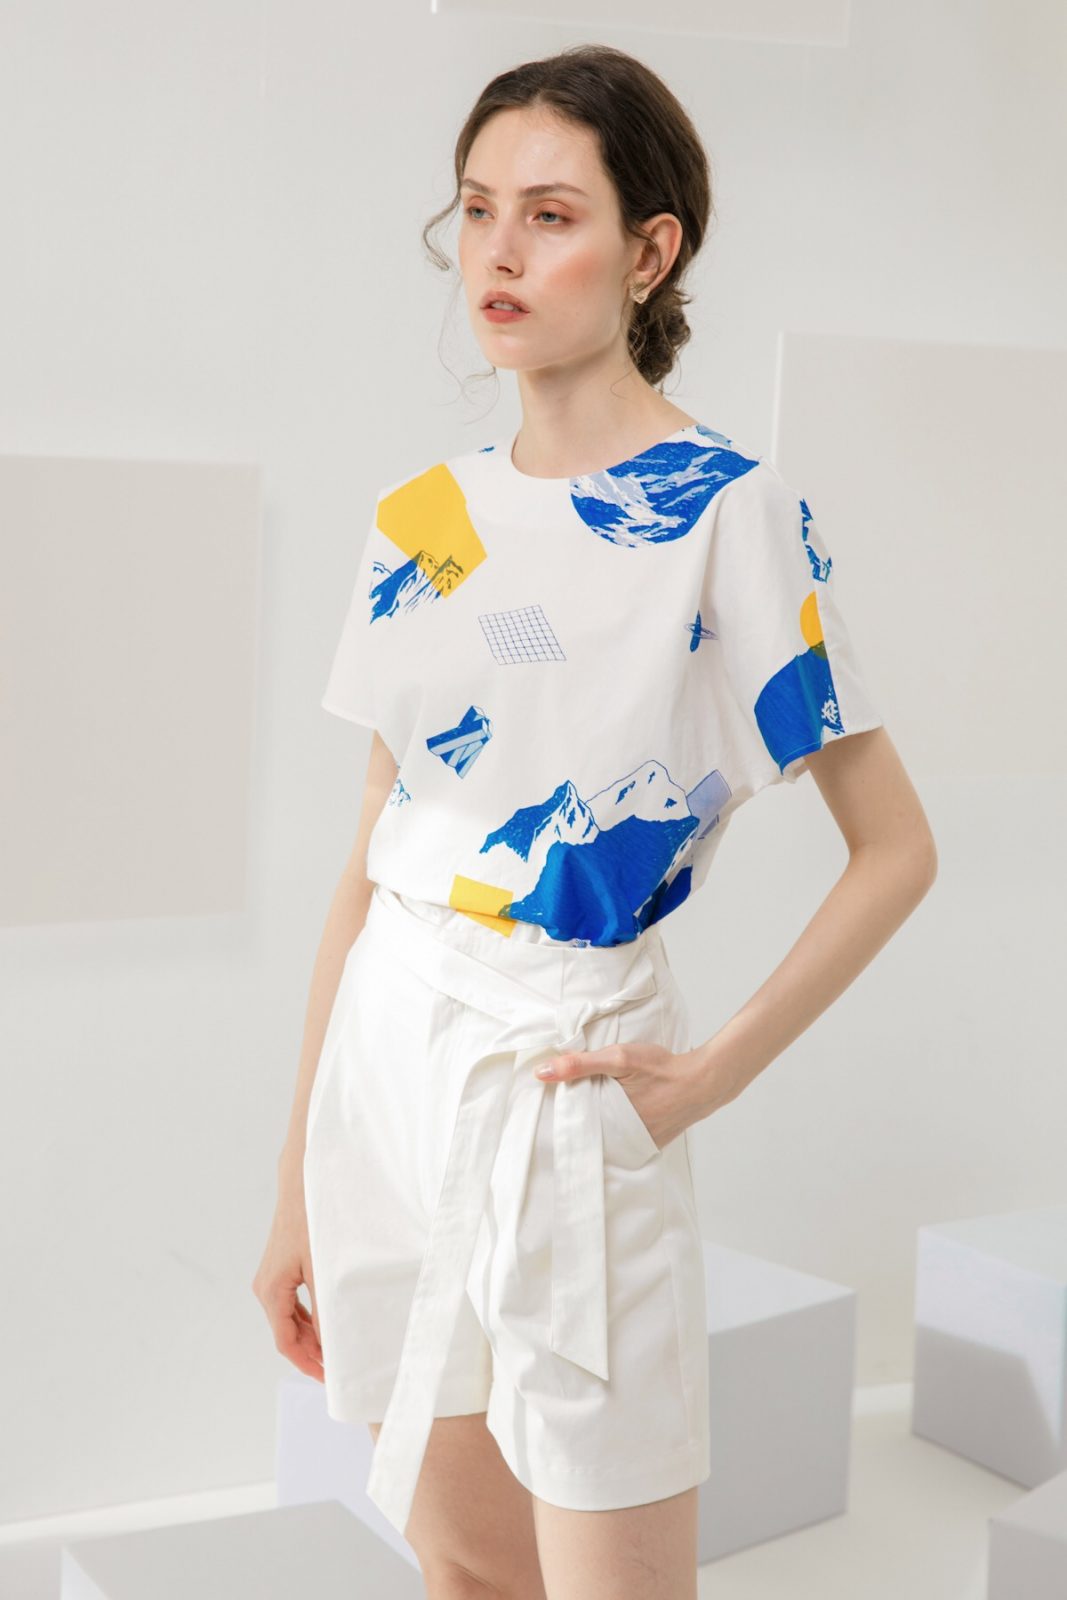 SKYE modern minimalist women clothing fashion Amelia short sleeve top interstellar 3